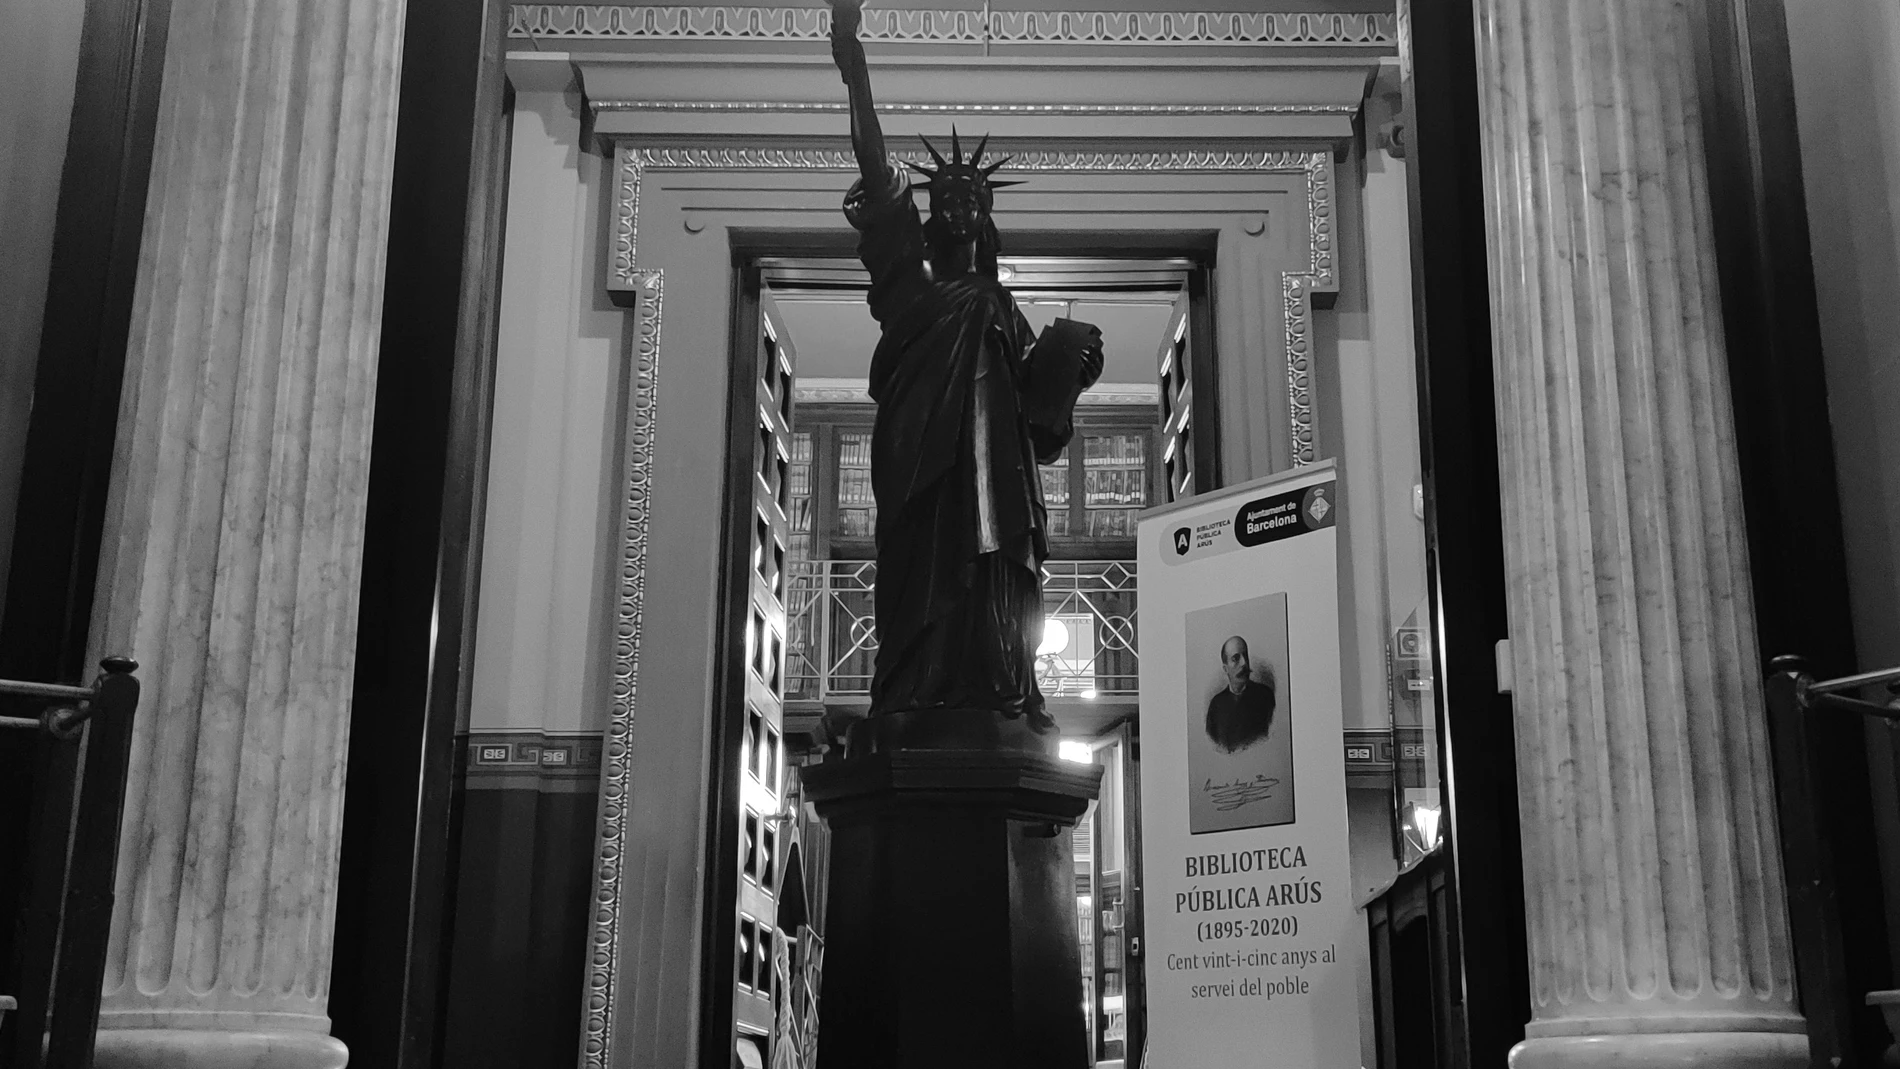 La Estatua de la Libertad de la biblioteca Arús, en el paseo san Juan de Barcelona